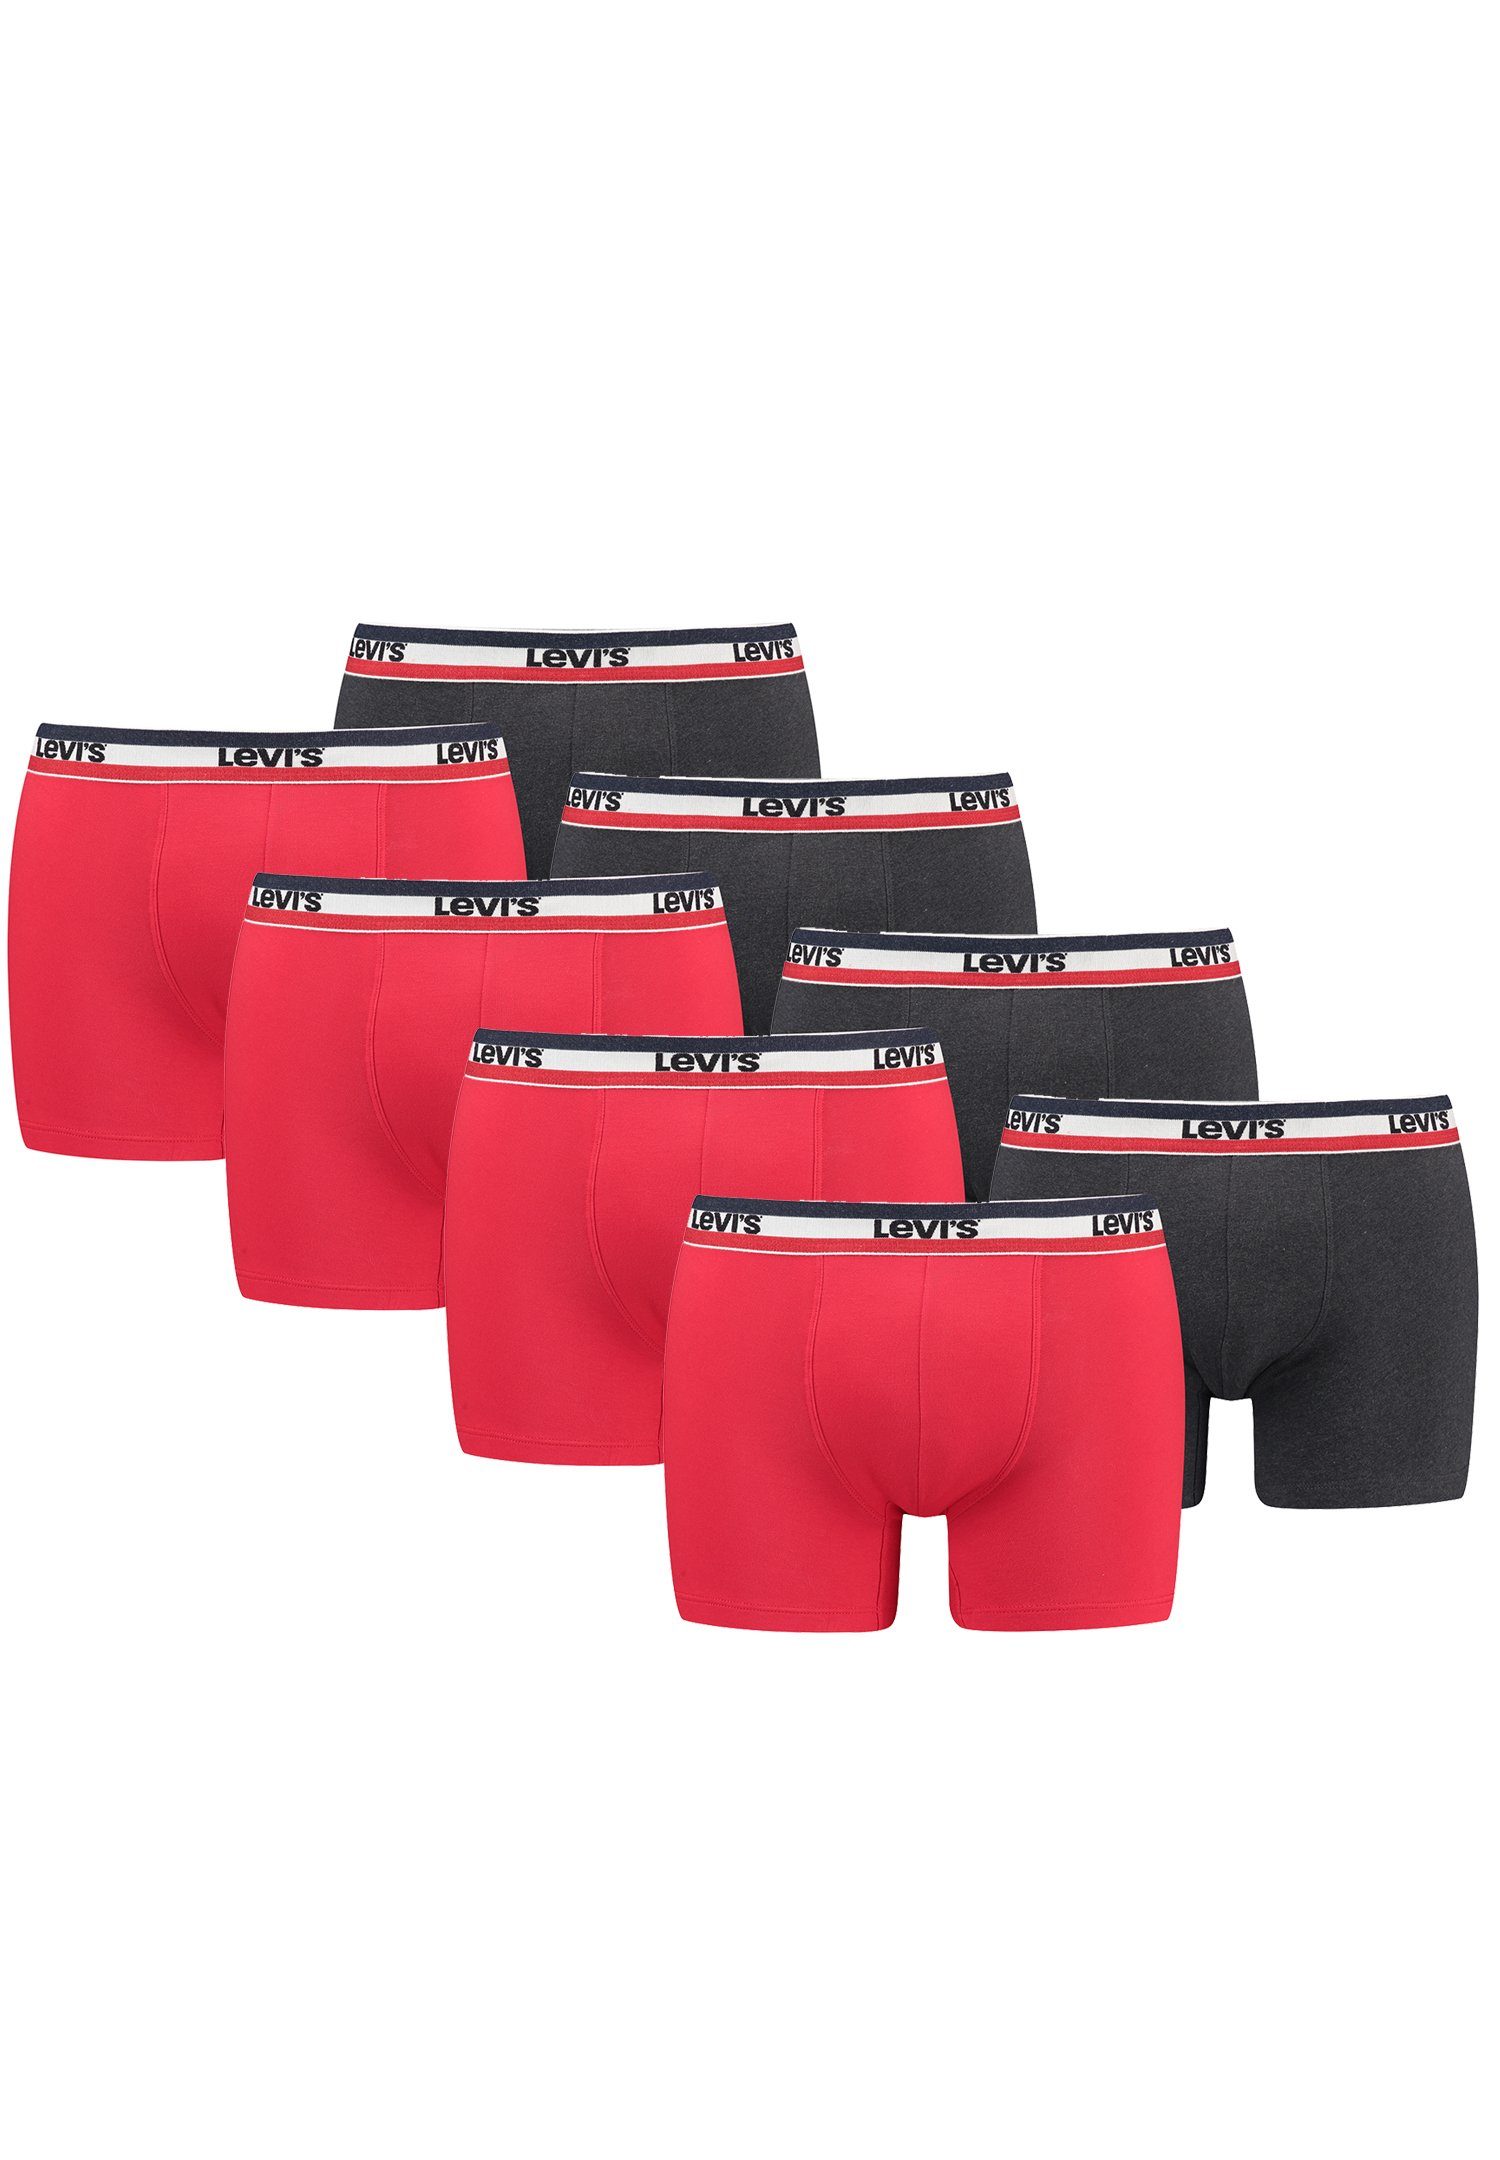 Angebot unterbreiten Levi's® Boxershorts MEN SPRTSWR LOGO 6er BOXER 8er-Pack) Pack Black 8-St., / Red (Set, ORGANIC BRIEF CO